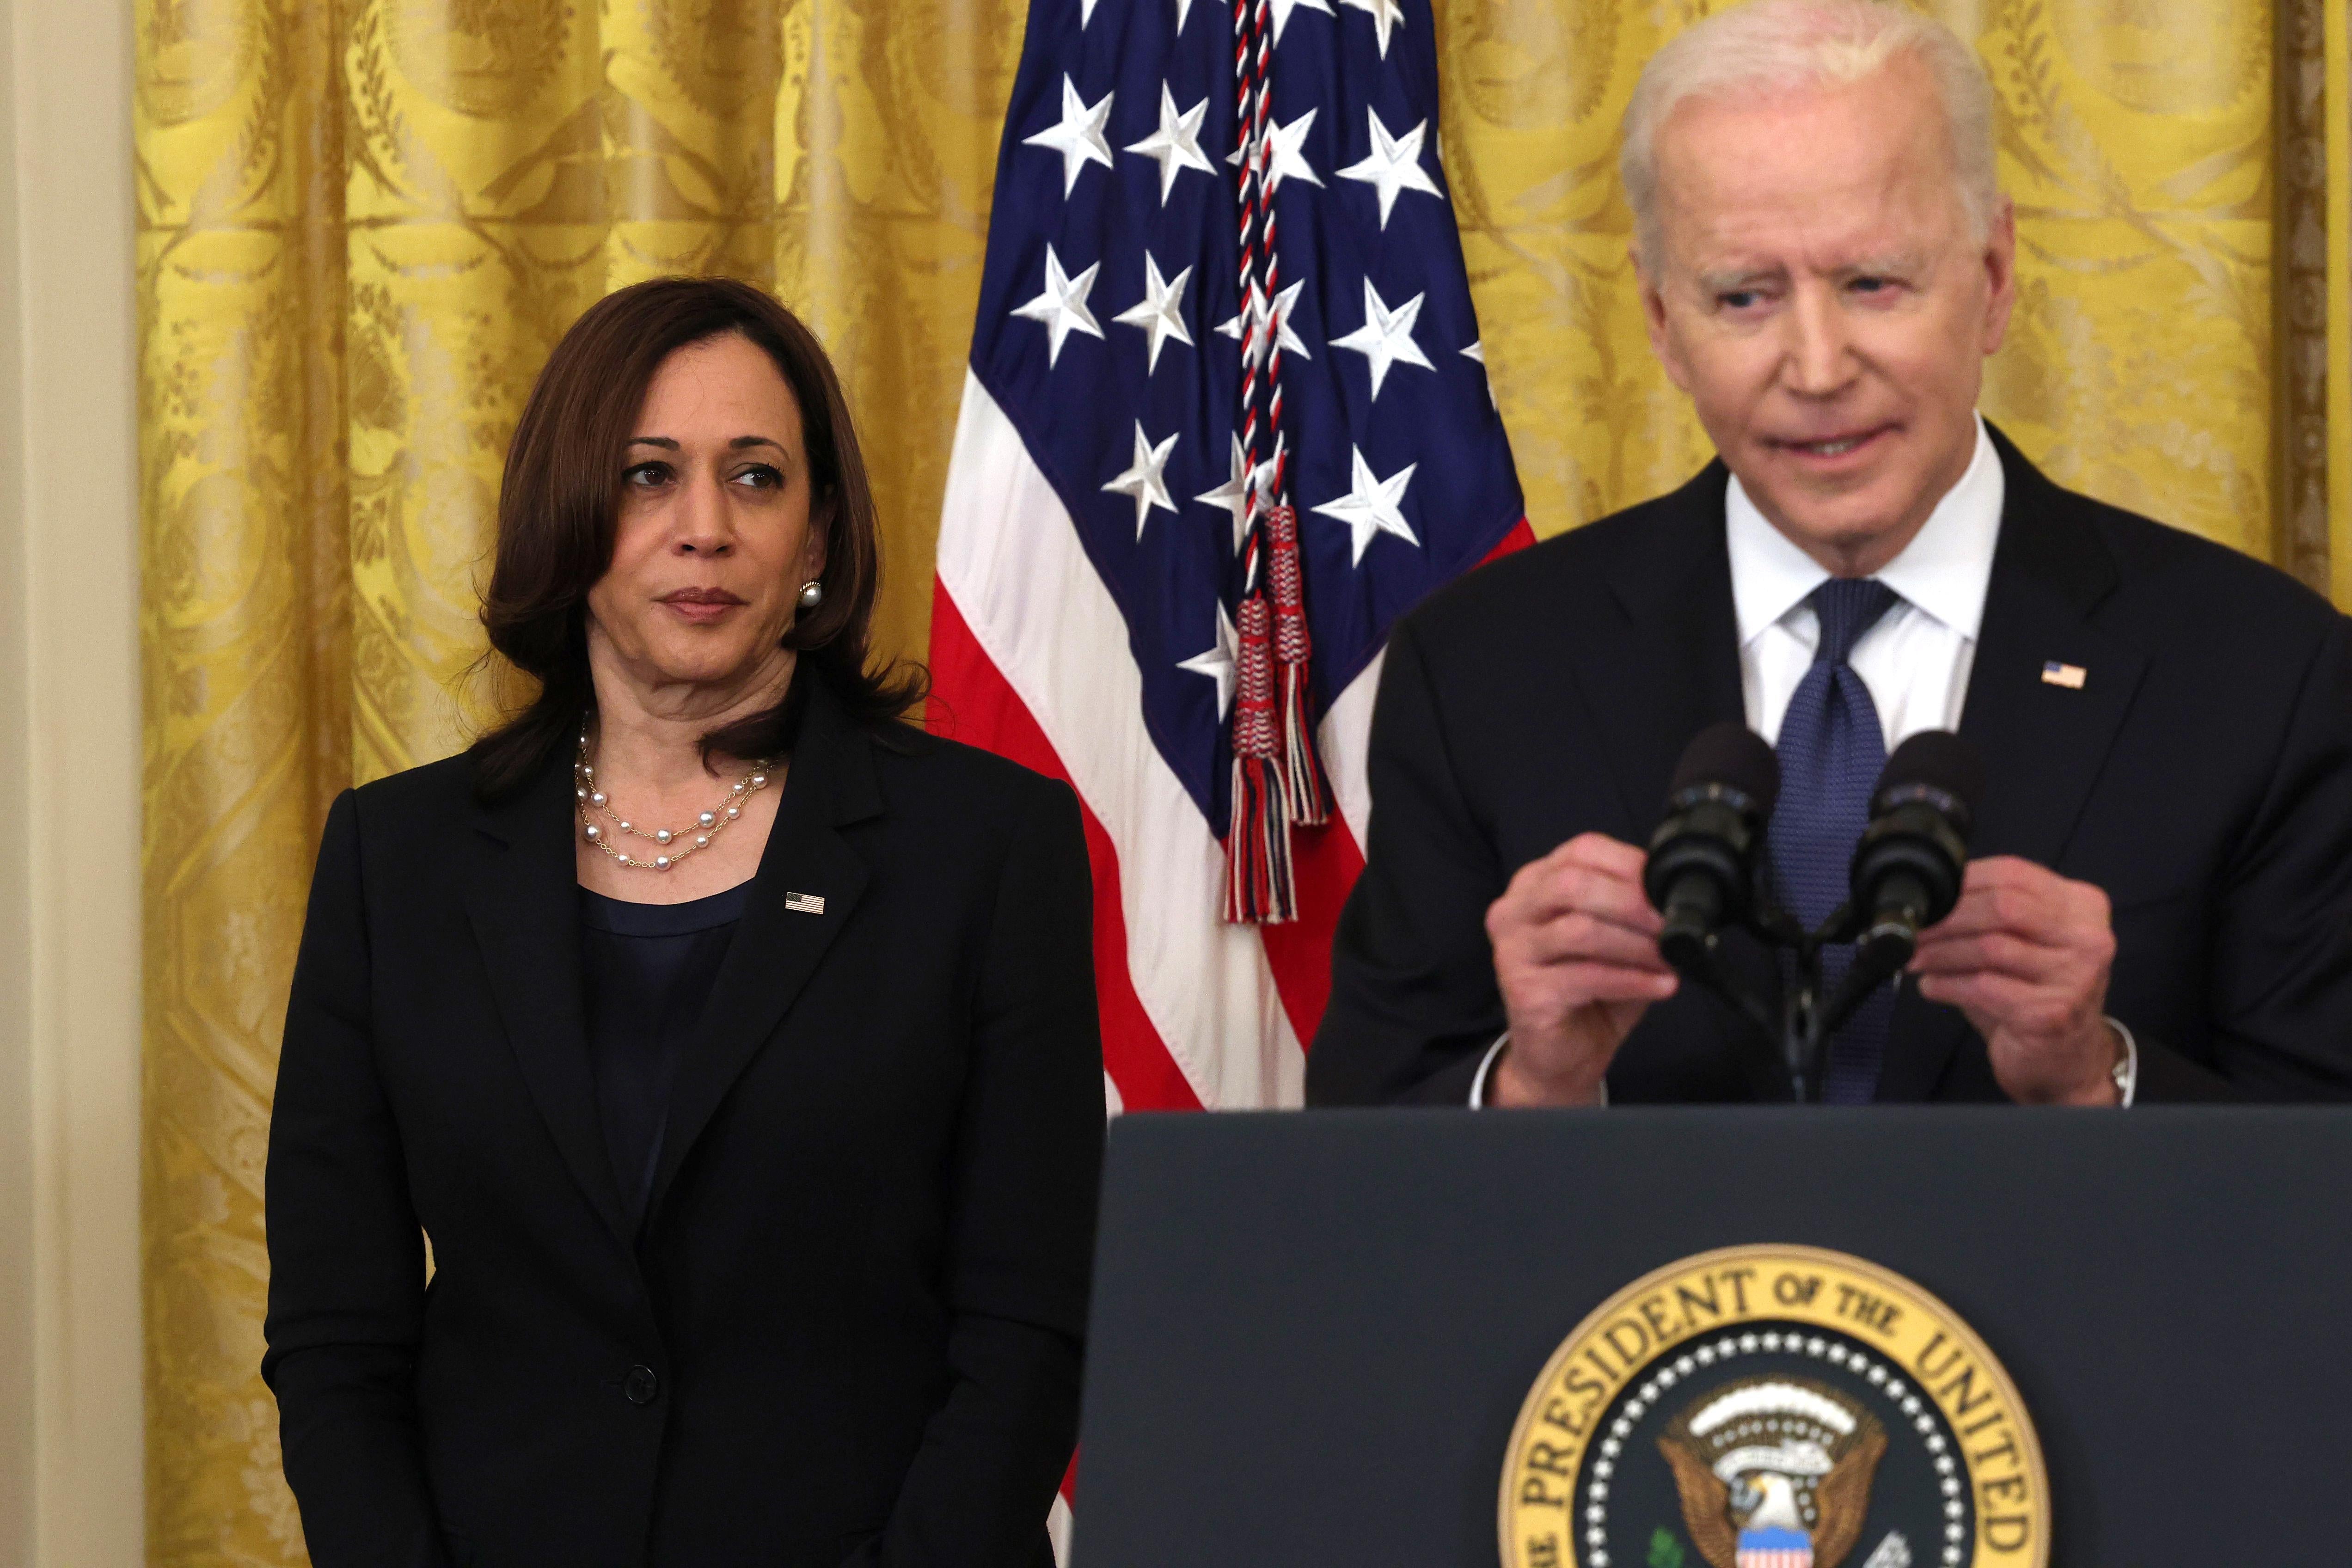 Harris looks at Biden as he speaks at a lectern.